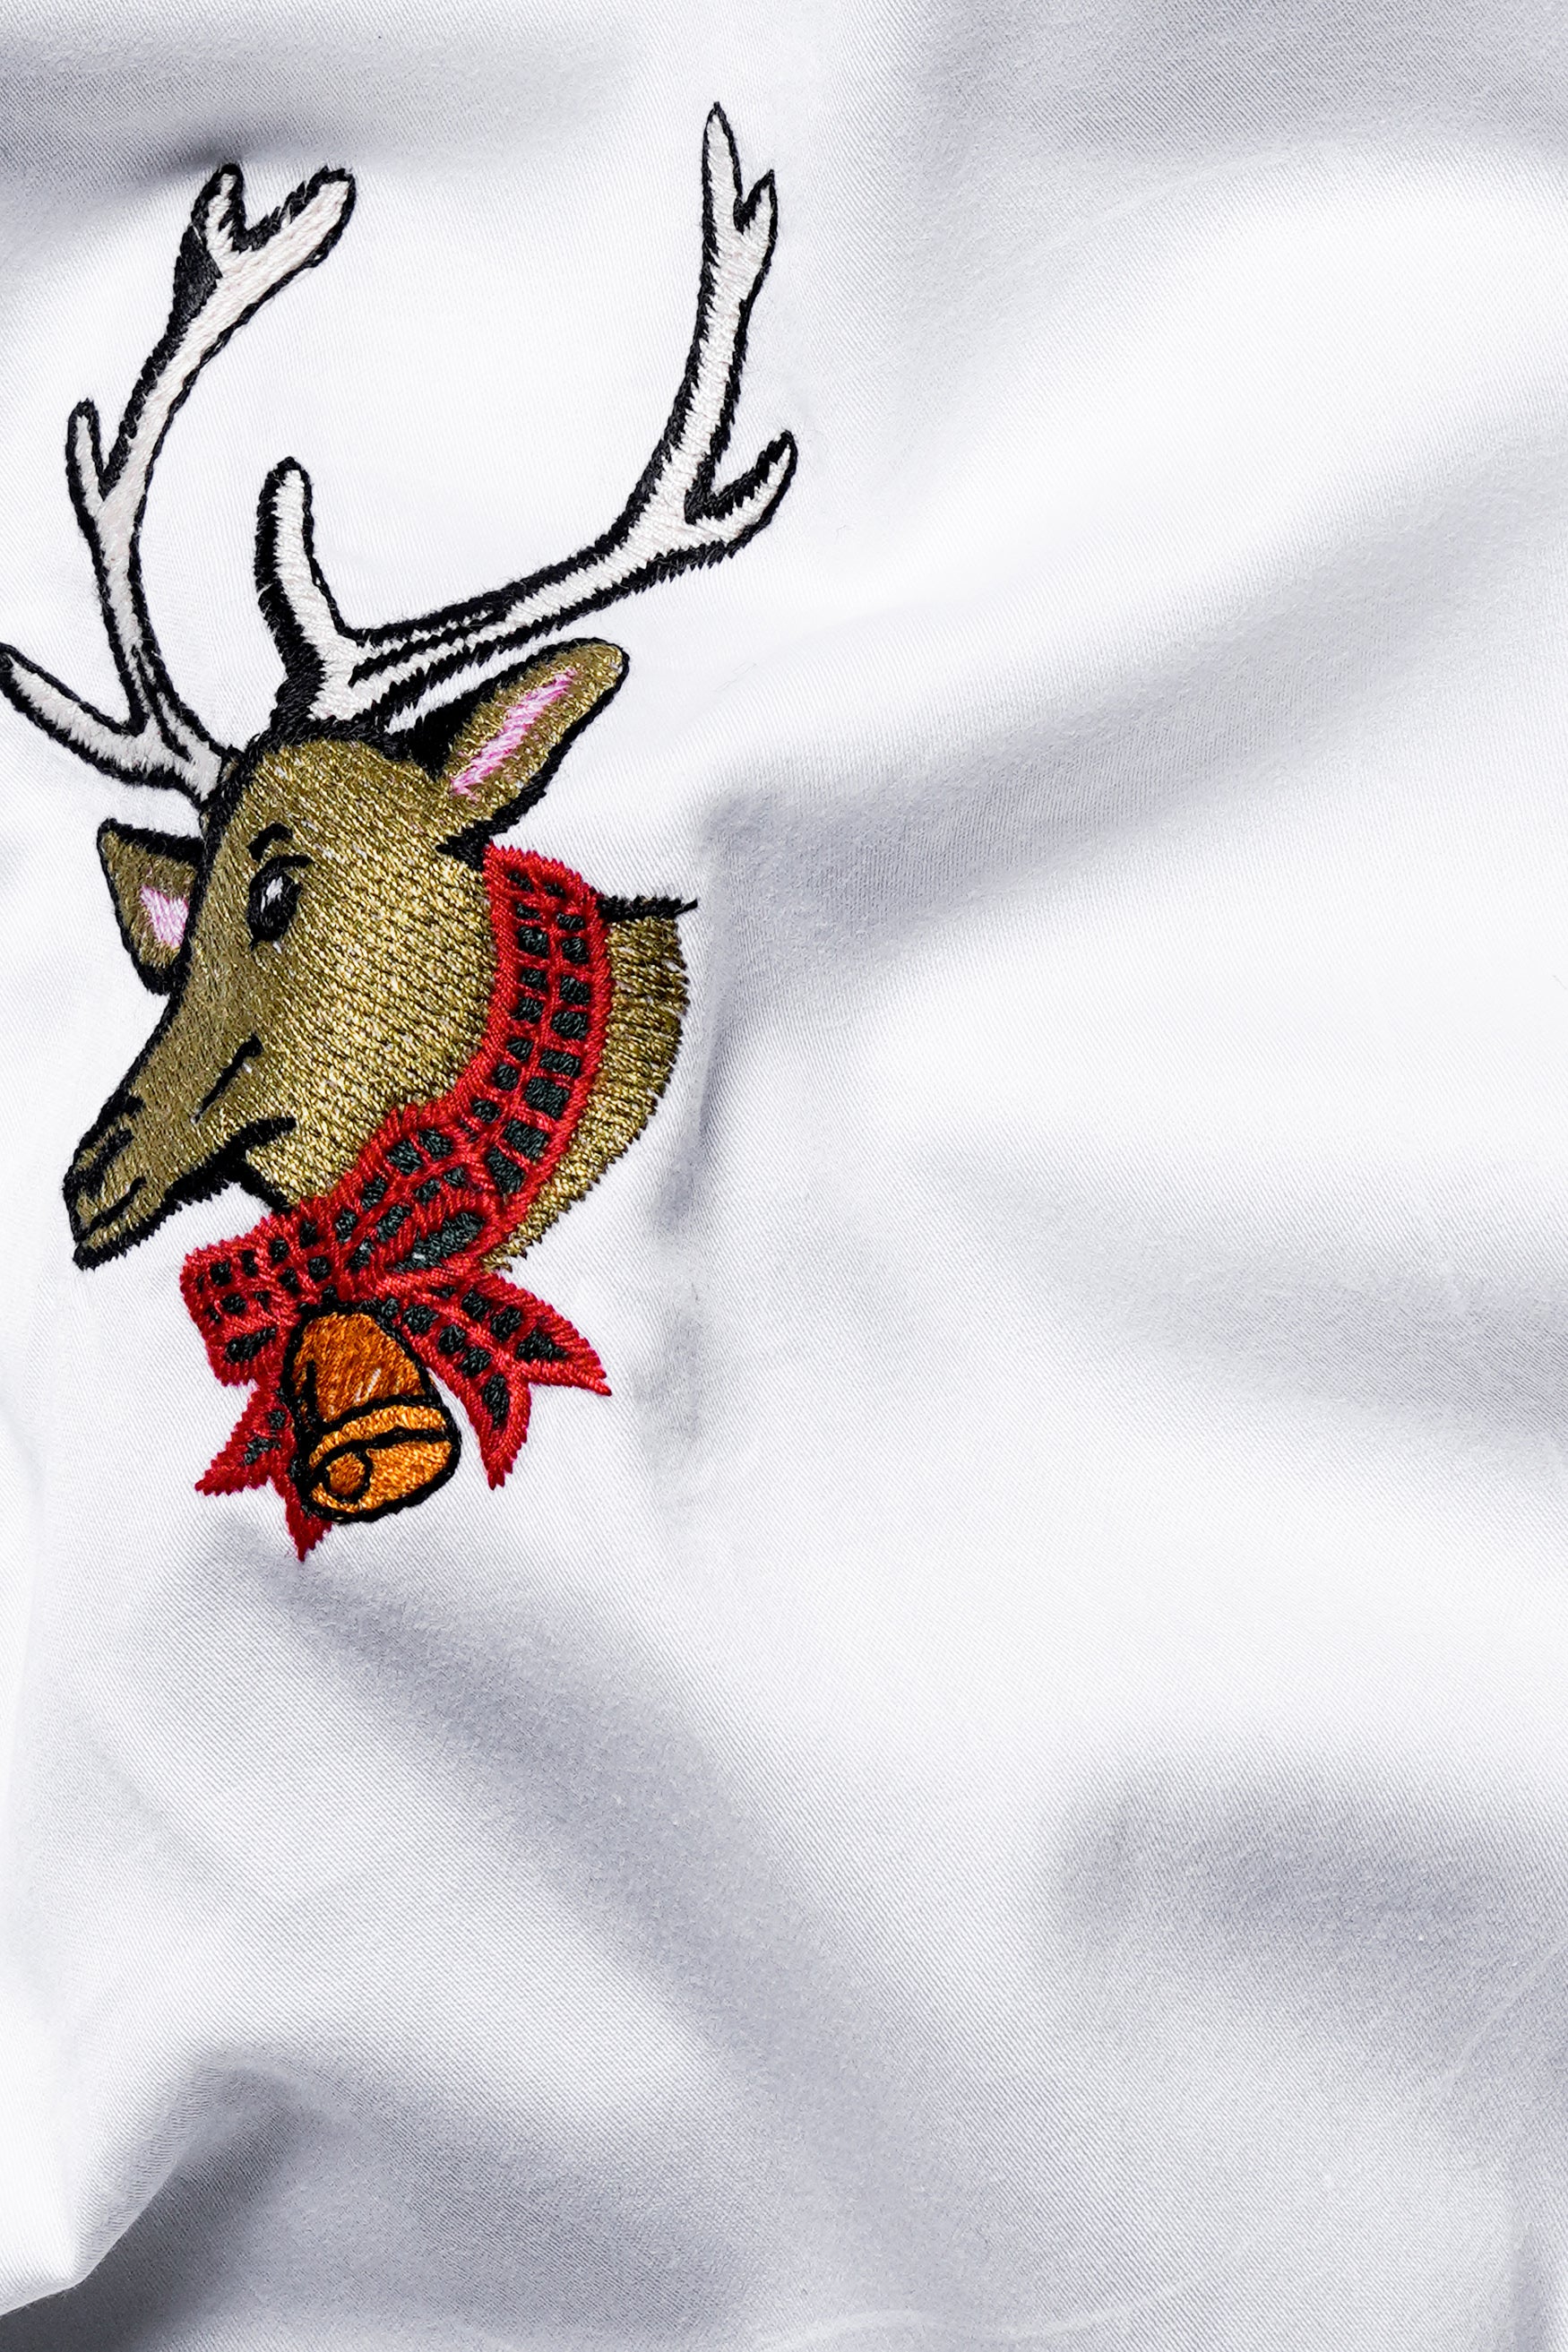 Bright White Subtle Sheen Deer Embroidered Super Soft Premium Cotton Shirt